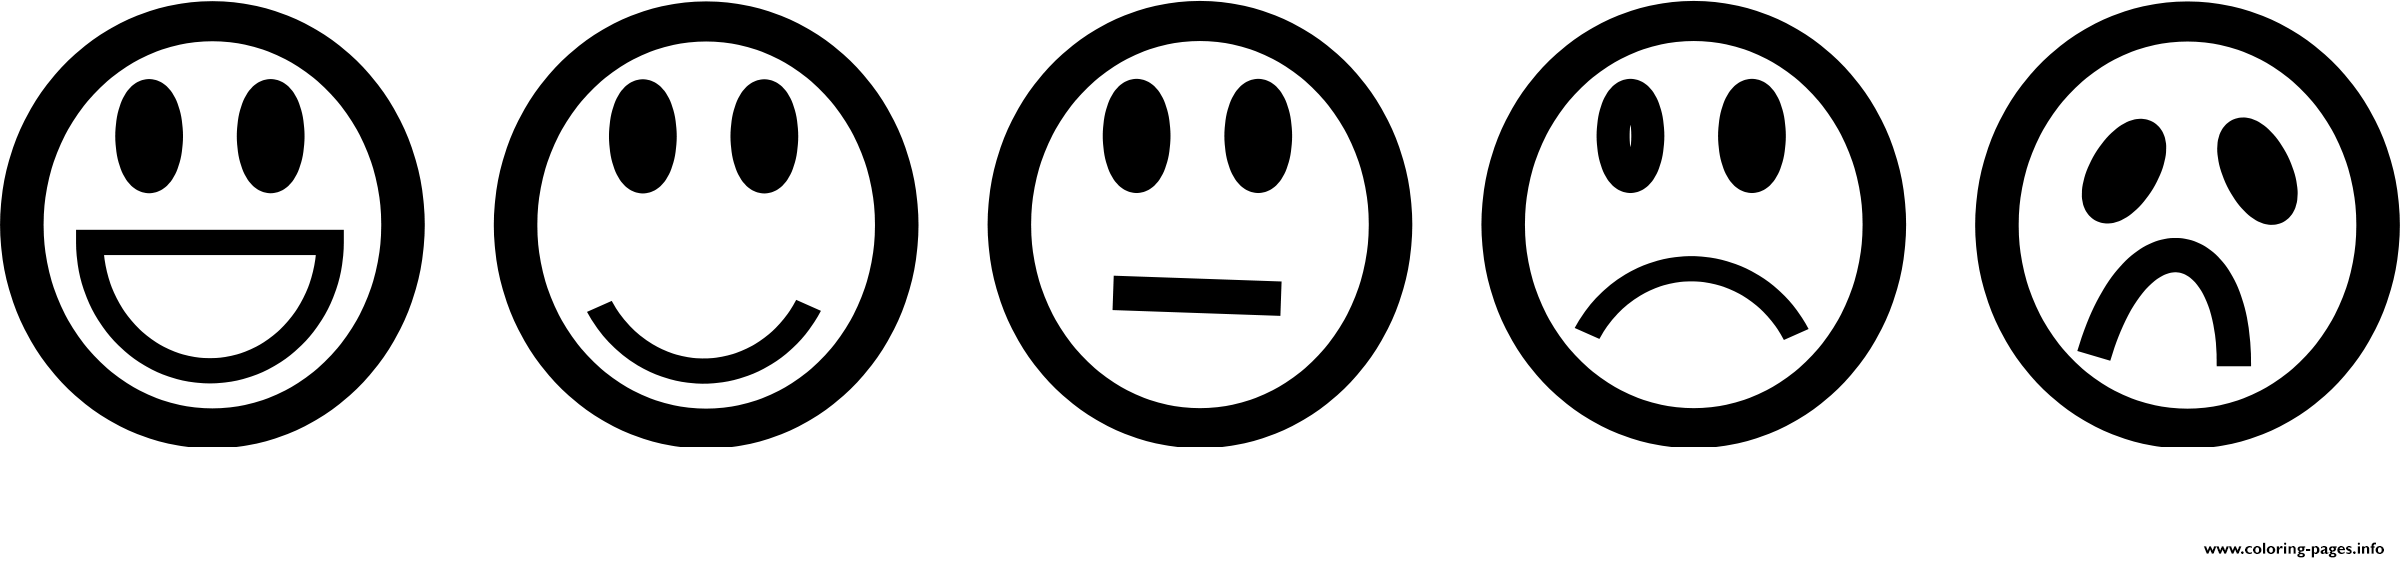 Emoji List Smile Sad Happy coloring